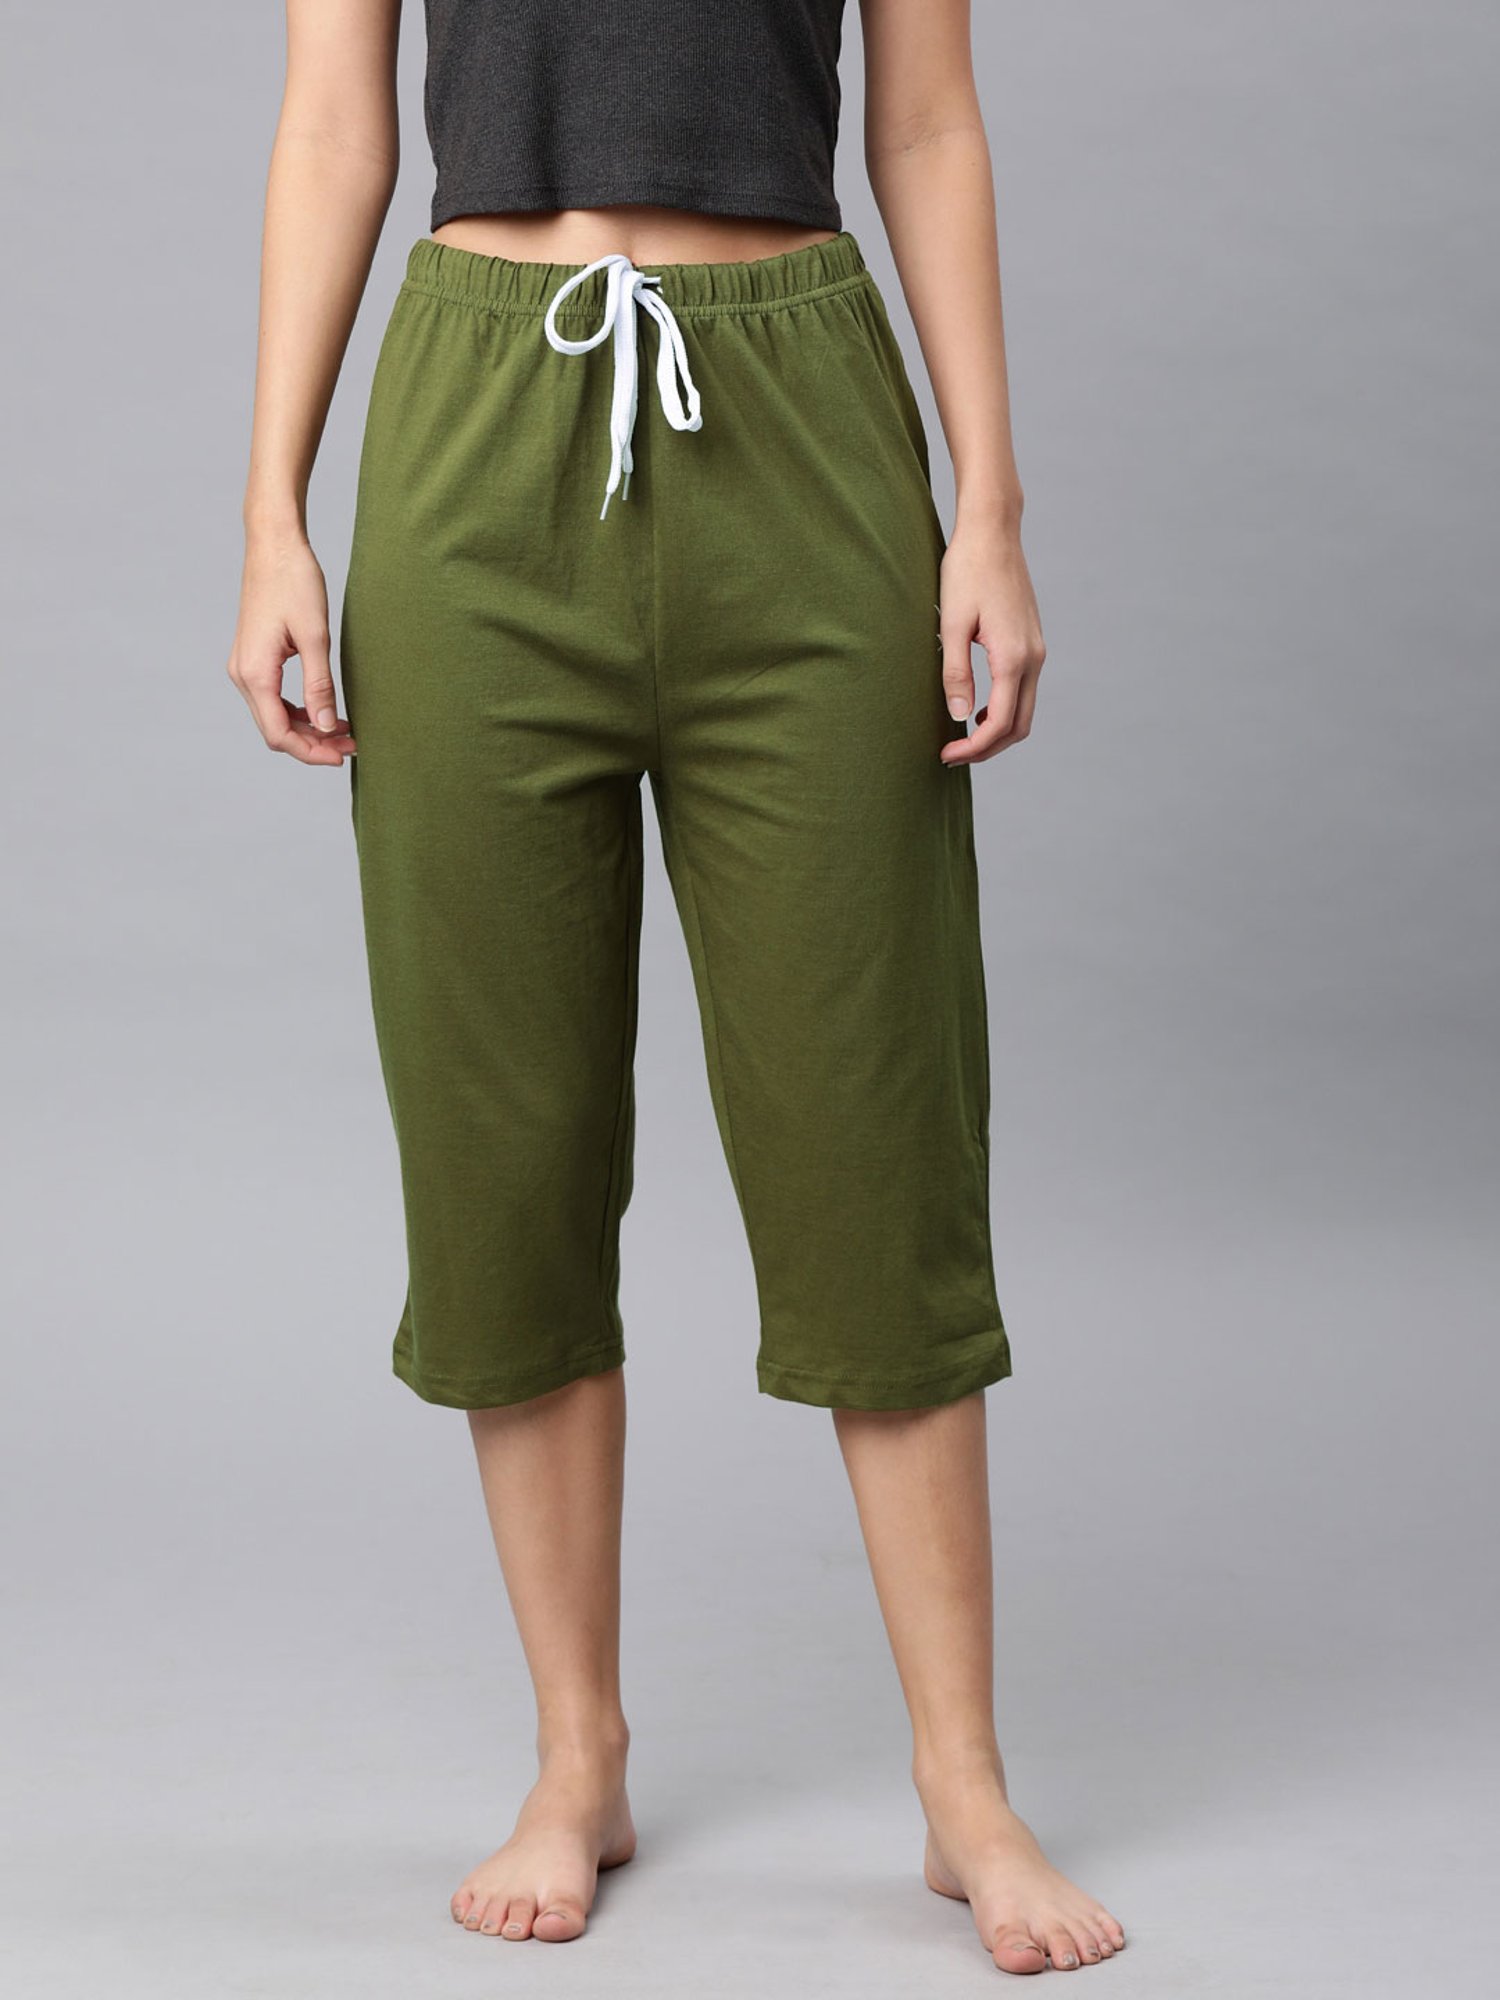  Green Capri Pants